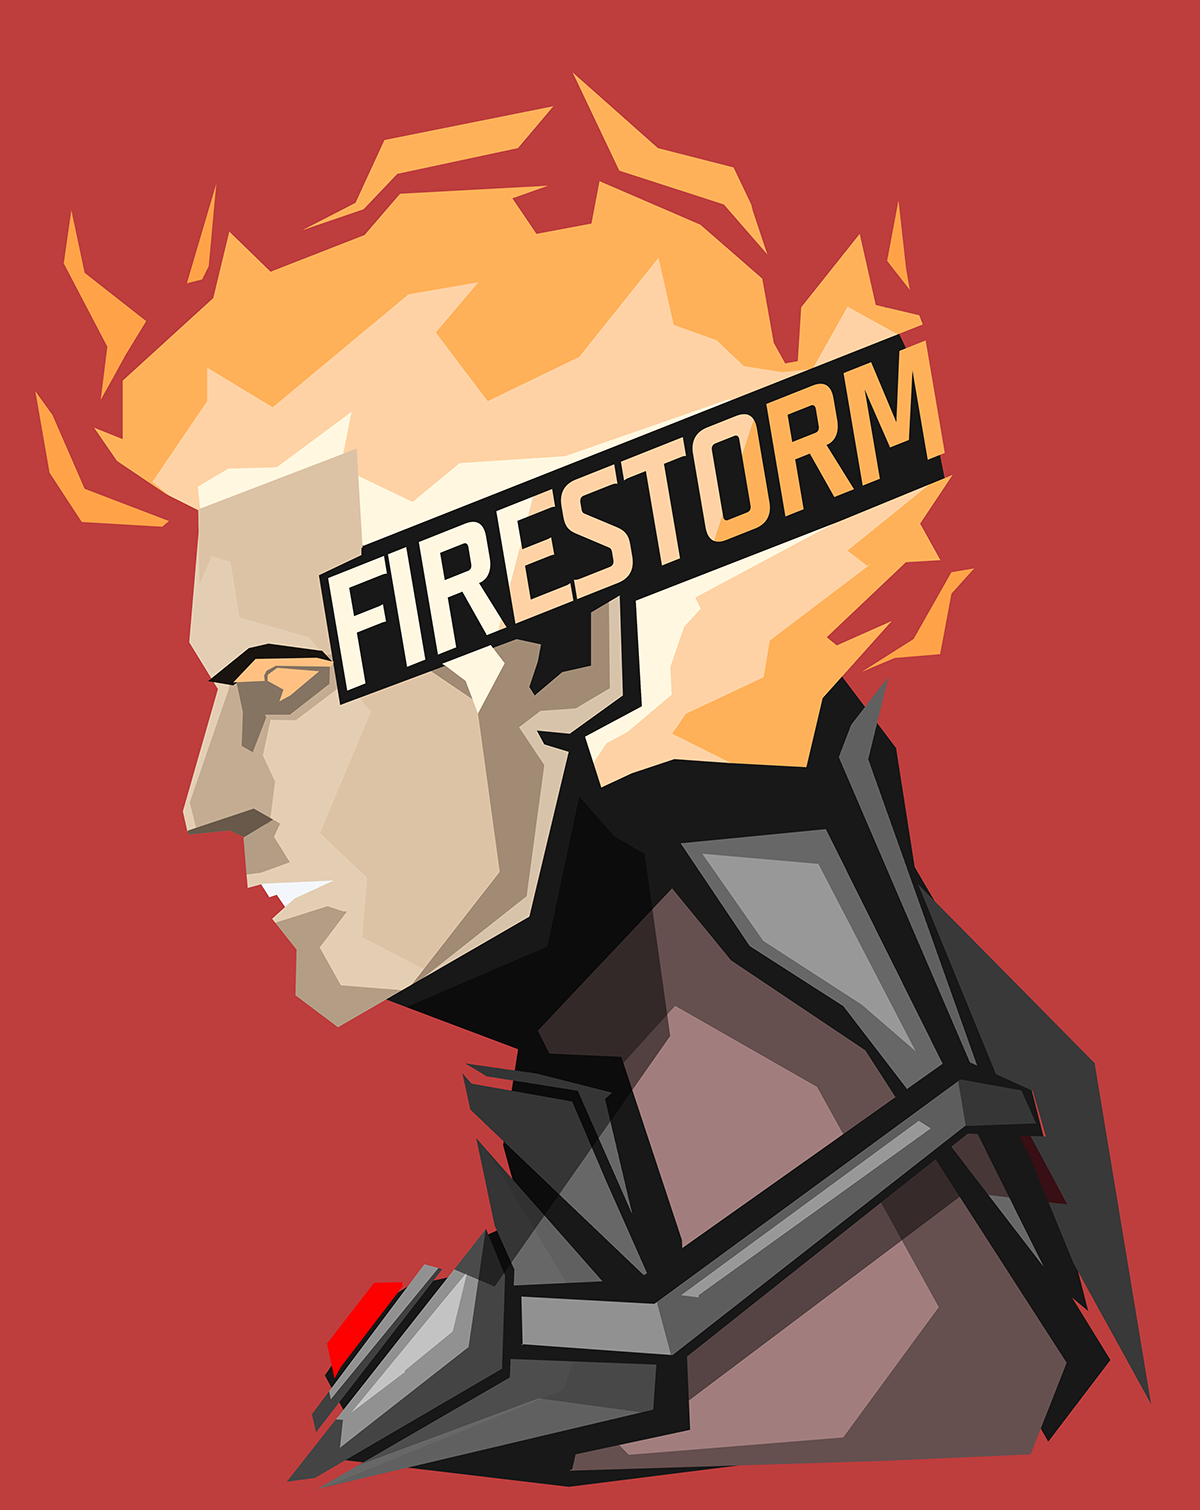 firestorm wallpaper,cartoon,fictional character,illustration,poster,font